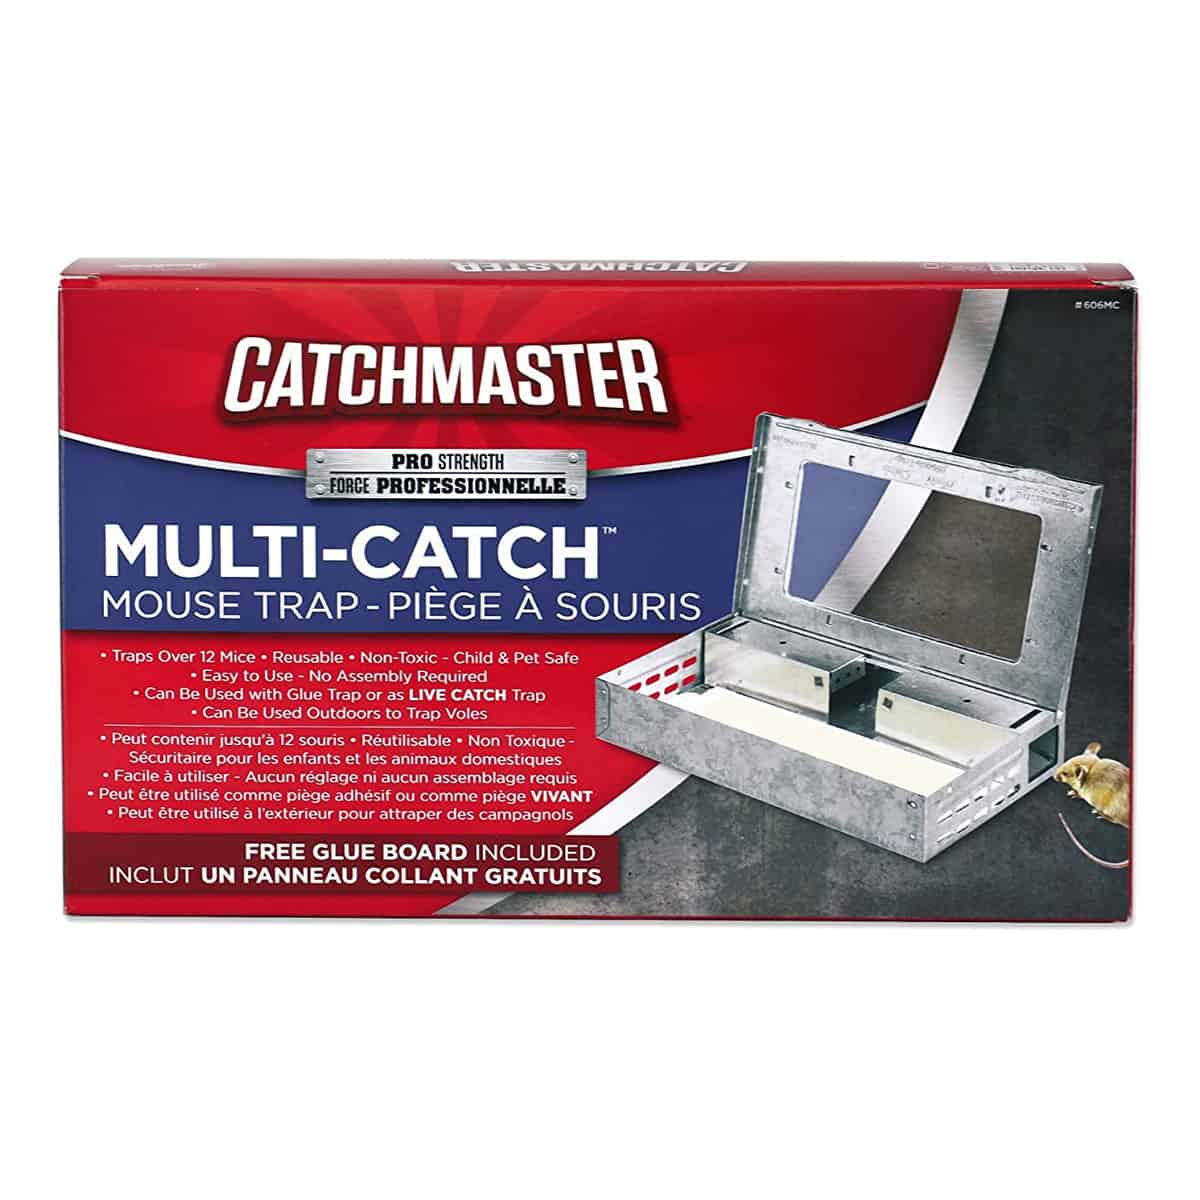 Catchmaster Pro Strength Multi-Catch Mouse Trap